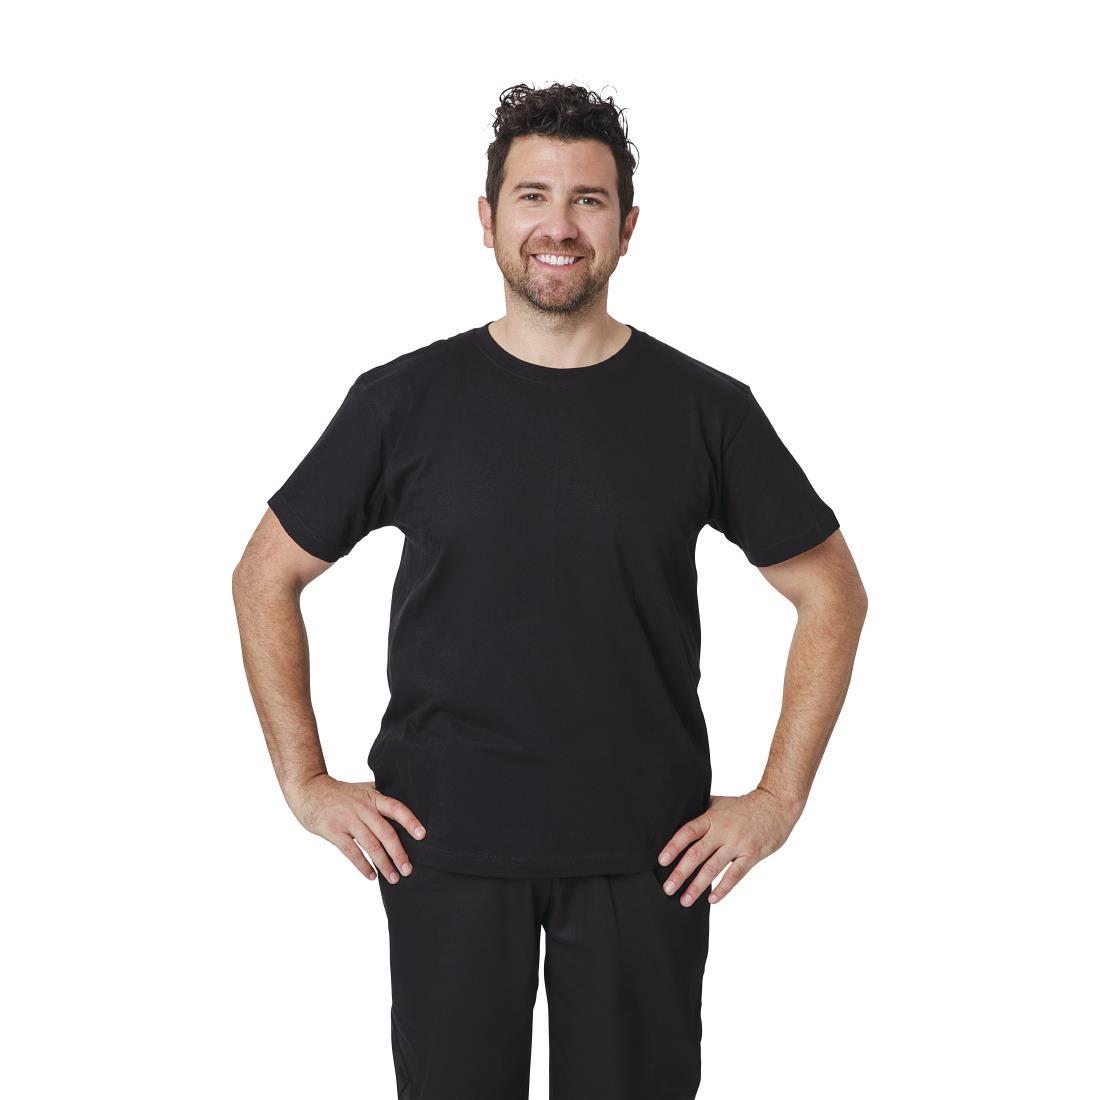 Unisex Chef T-Shirt Black XL - A295-XL  - 2